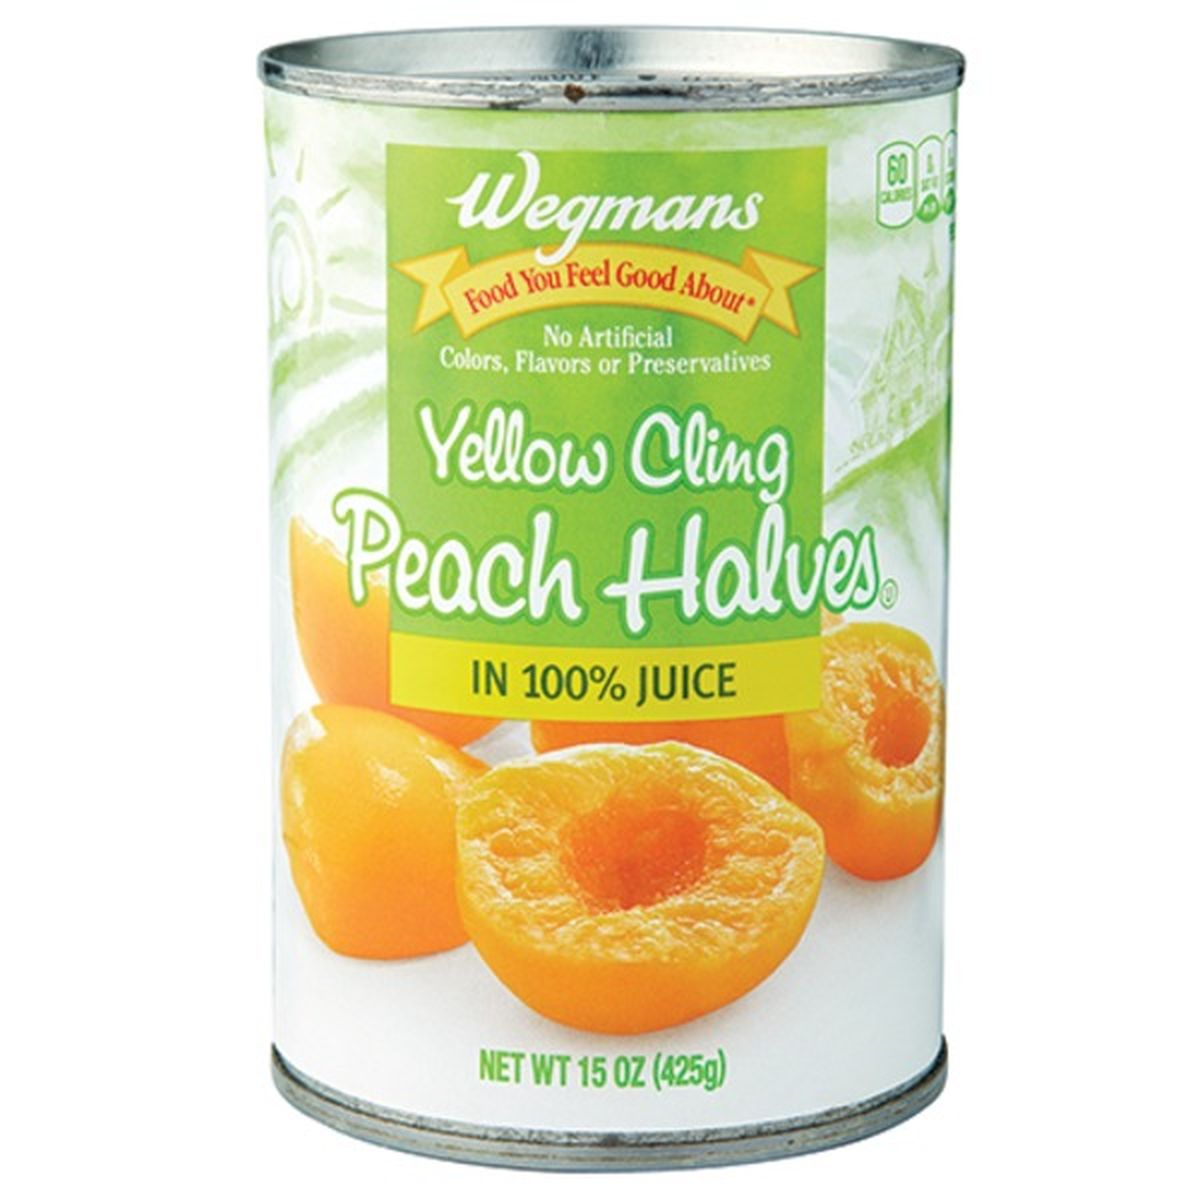 Calories in Wegmans Yellow Cling Peach Halves